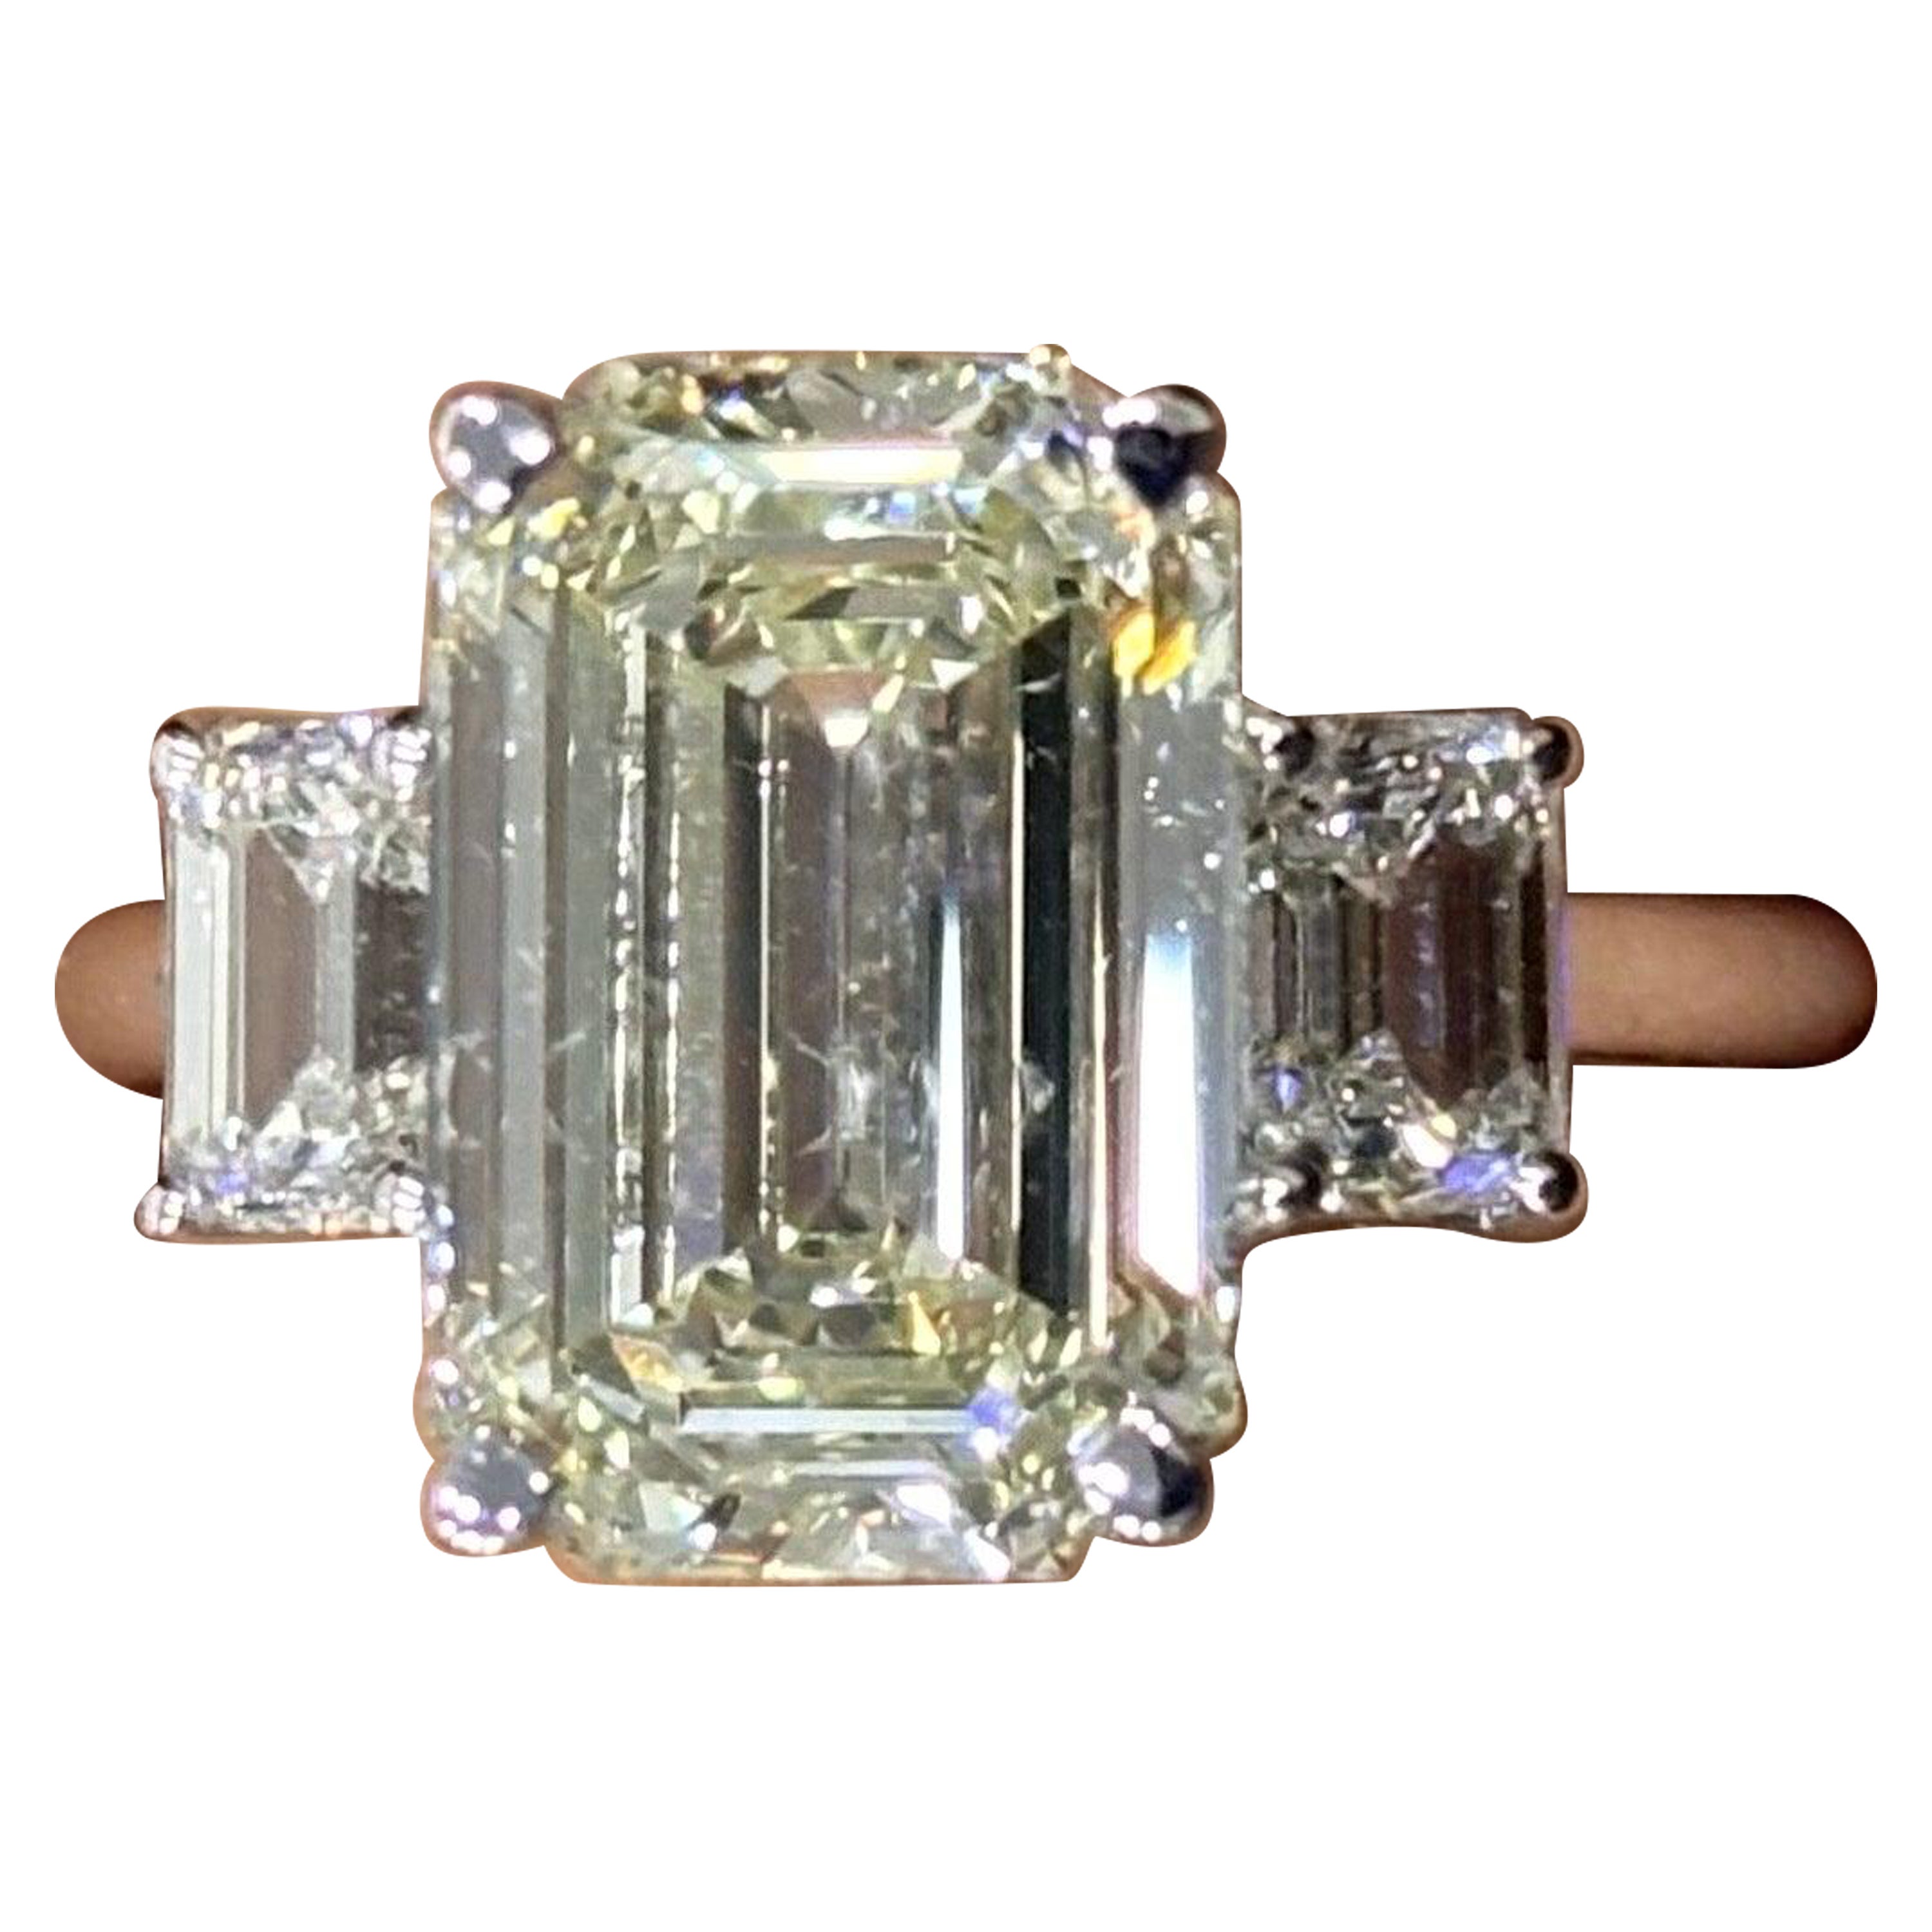 Royaal Stones Ltd Engagement Rings